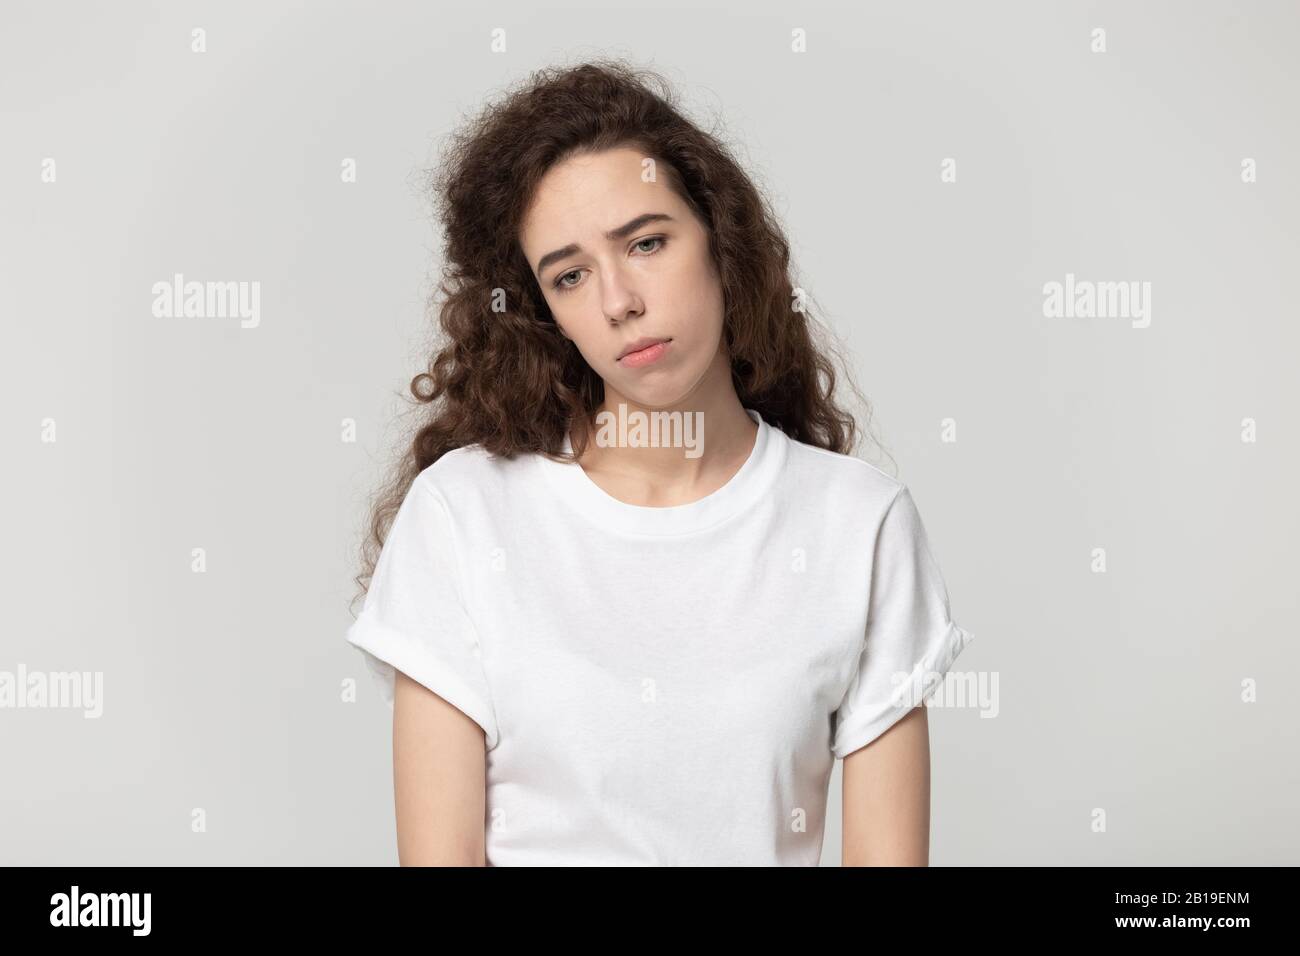 Depressed upset sad millennial woman feeling frustrated. Stock Photo